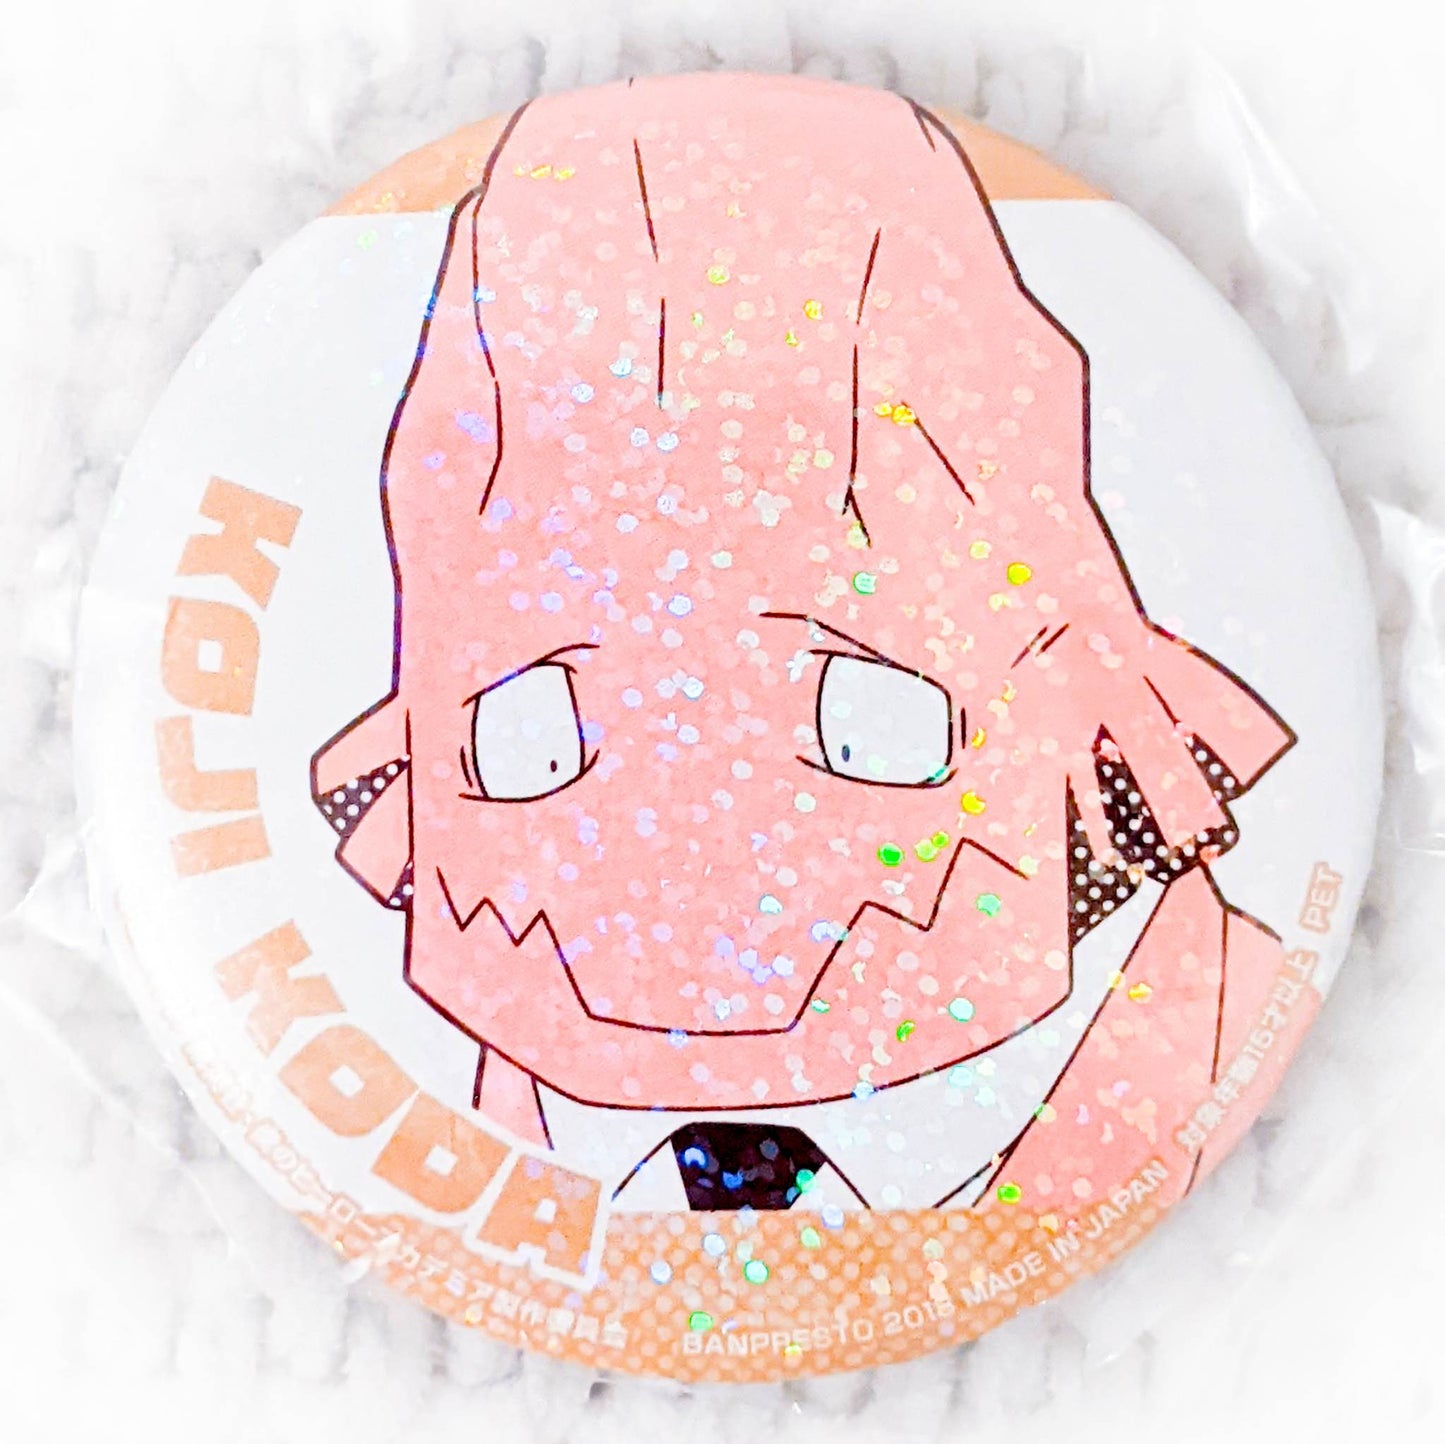 Koji Koda - My Hero Academia Anime Holographic Pin Badge Button